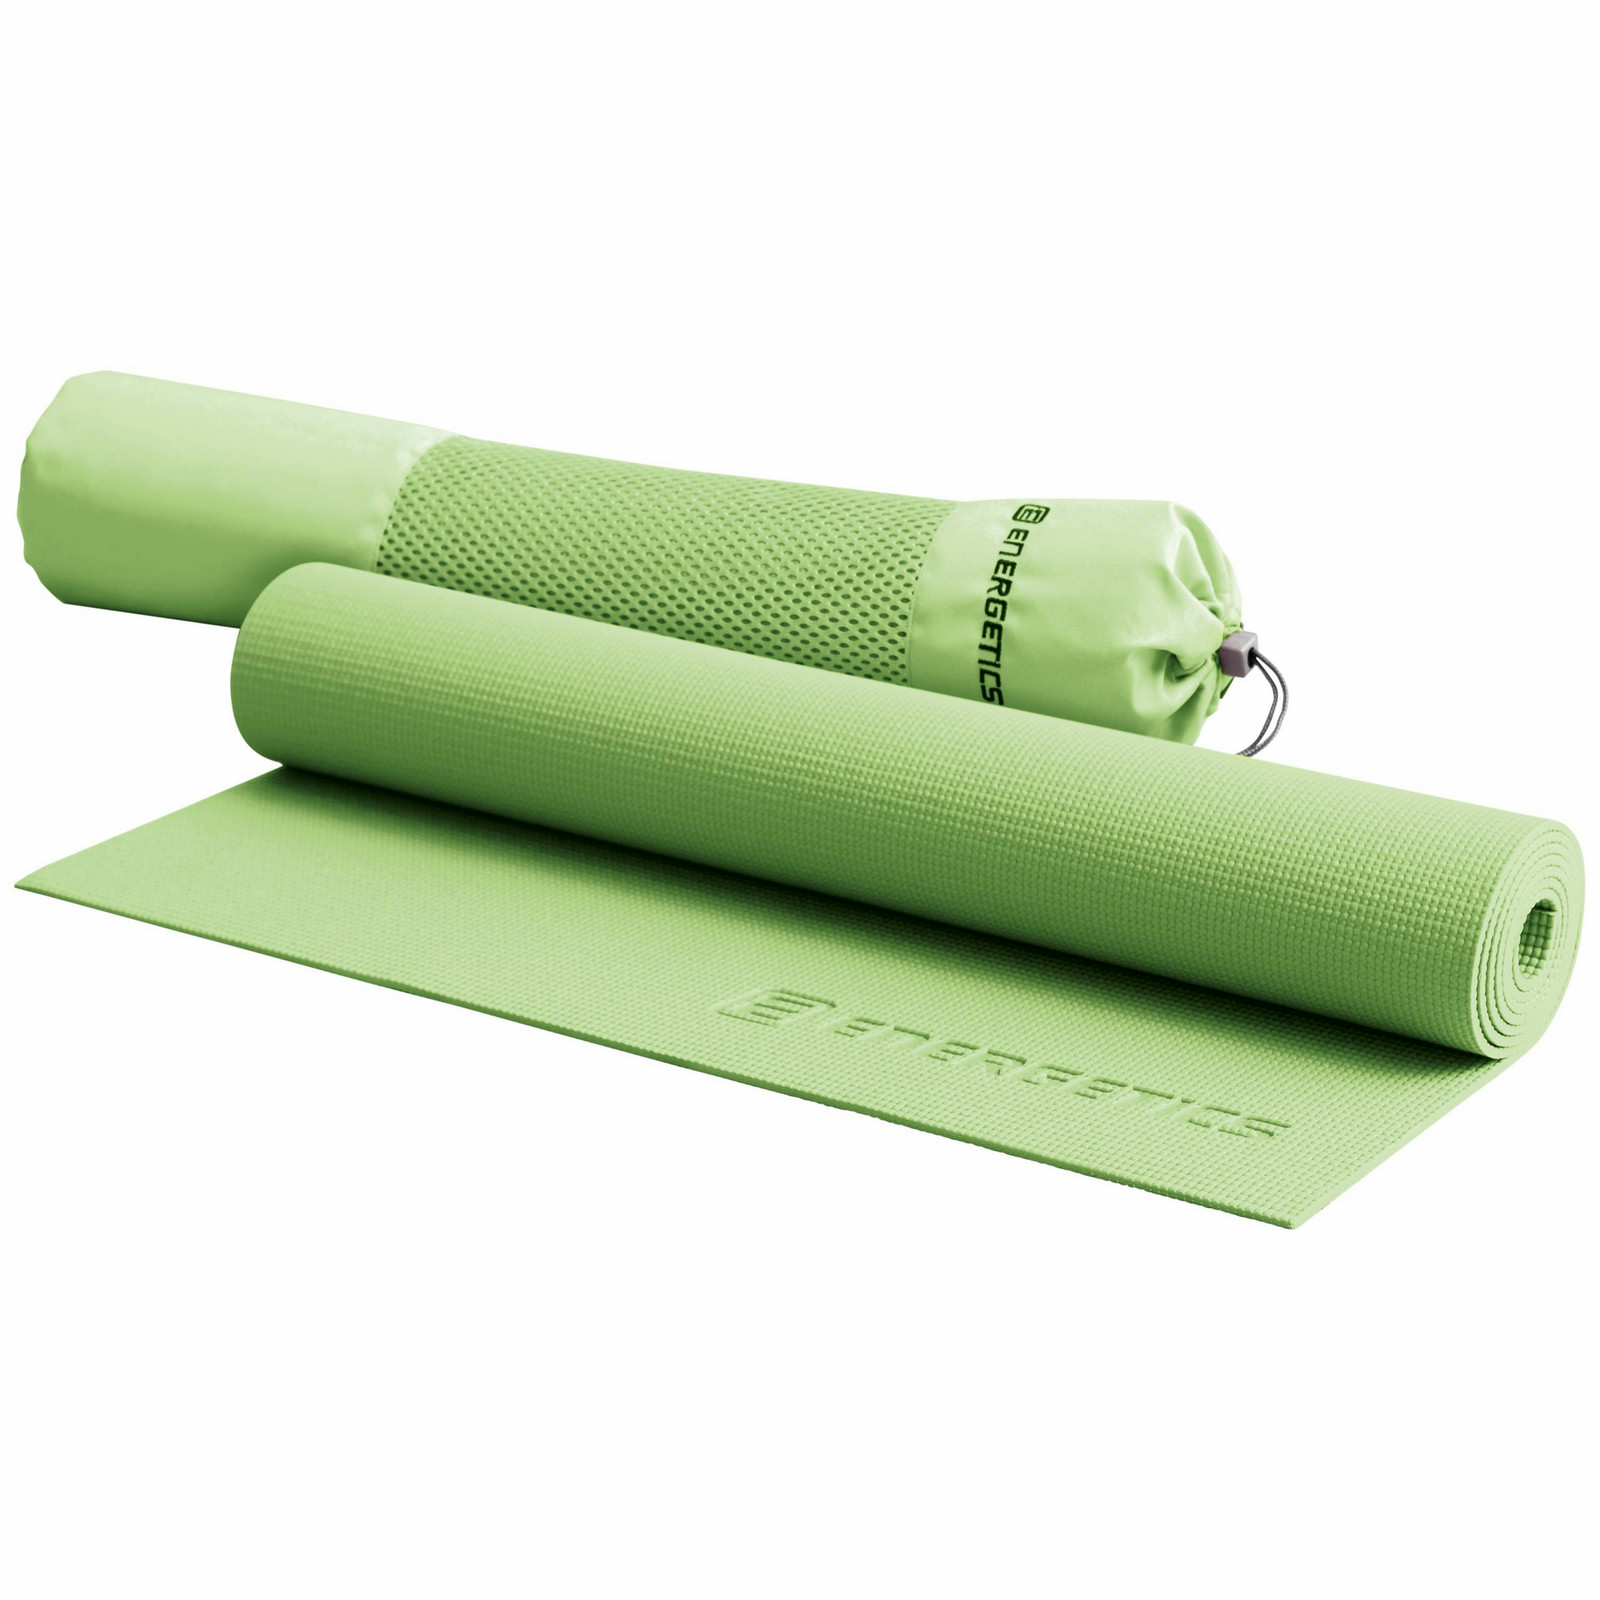 yoga mat with price